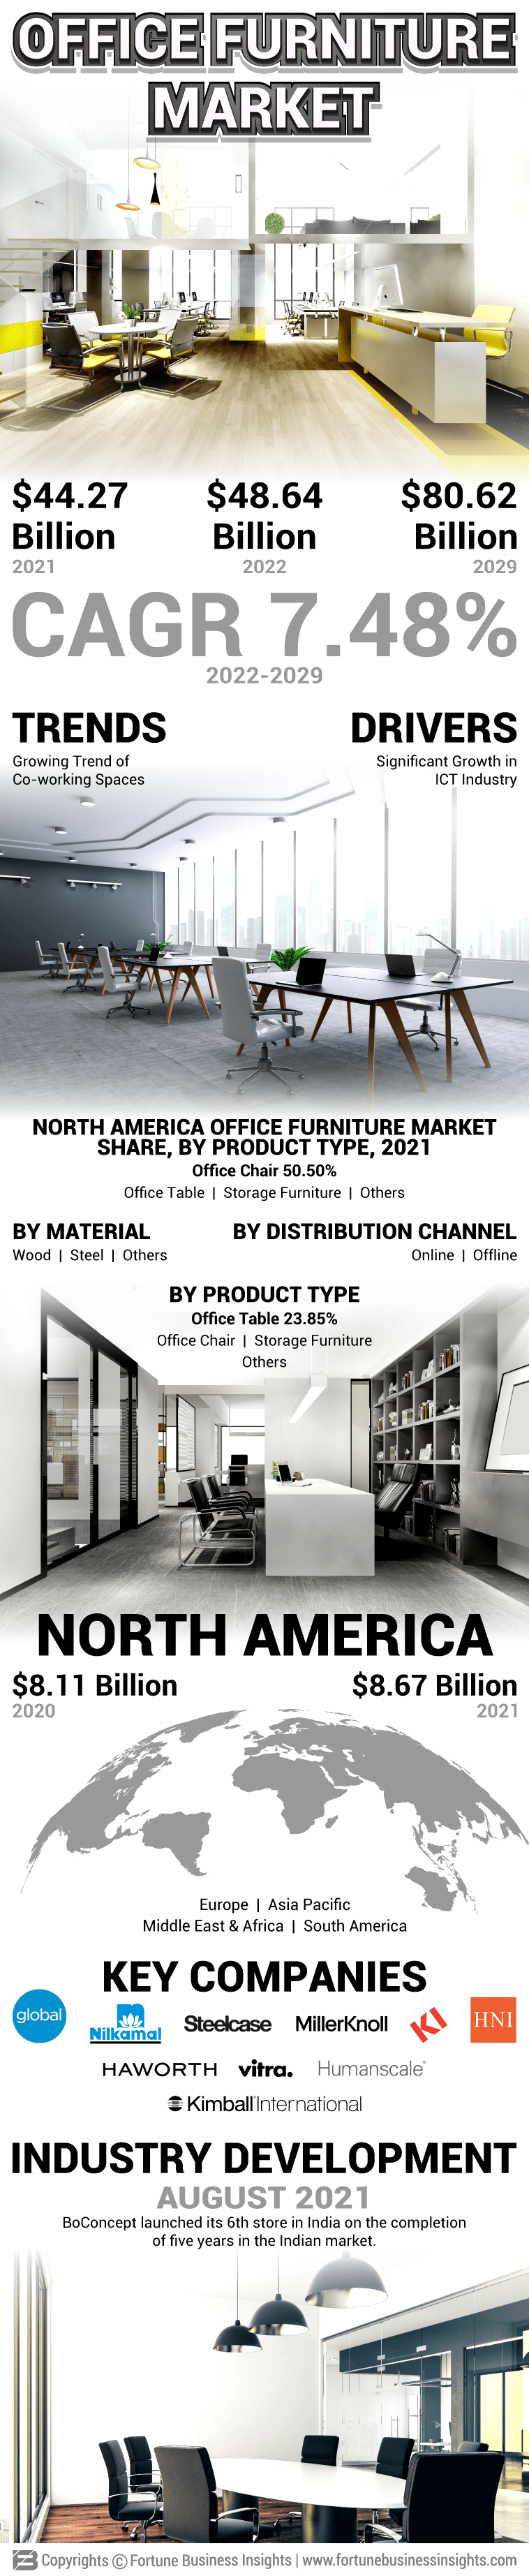 Office Furniture Market